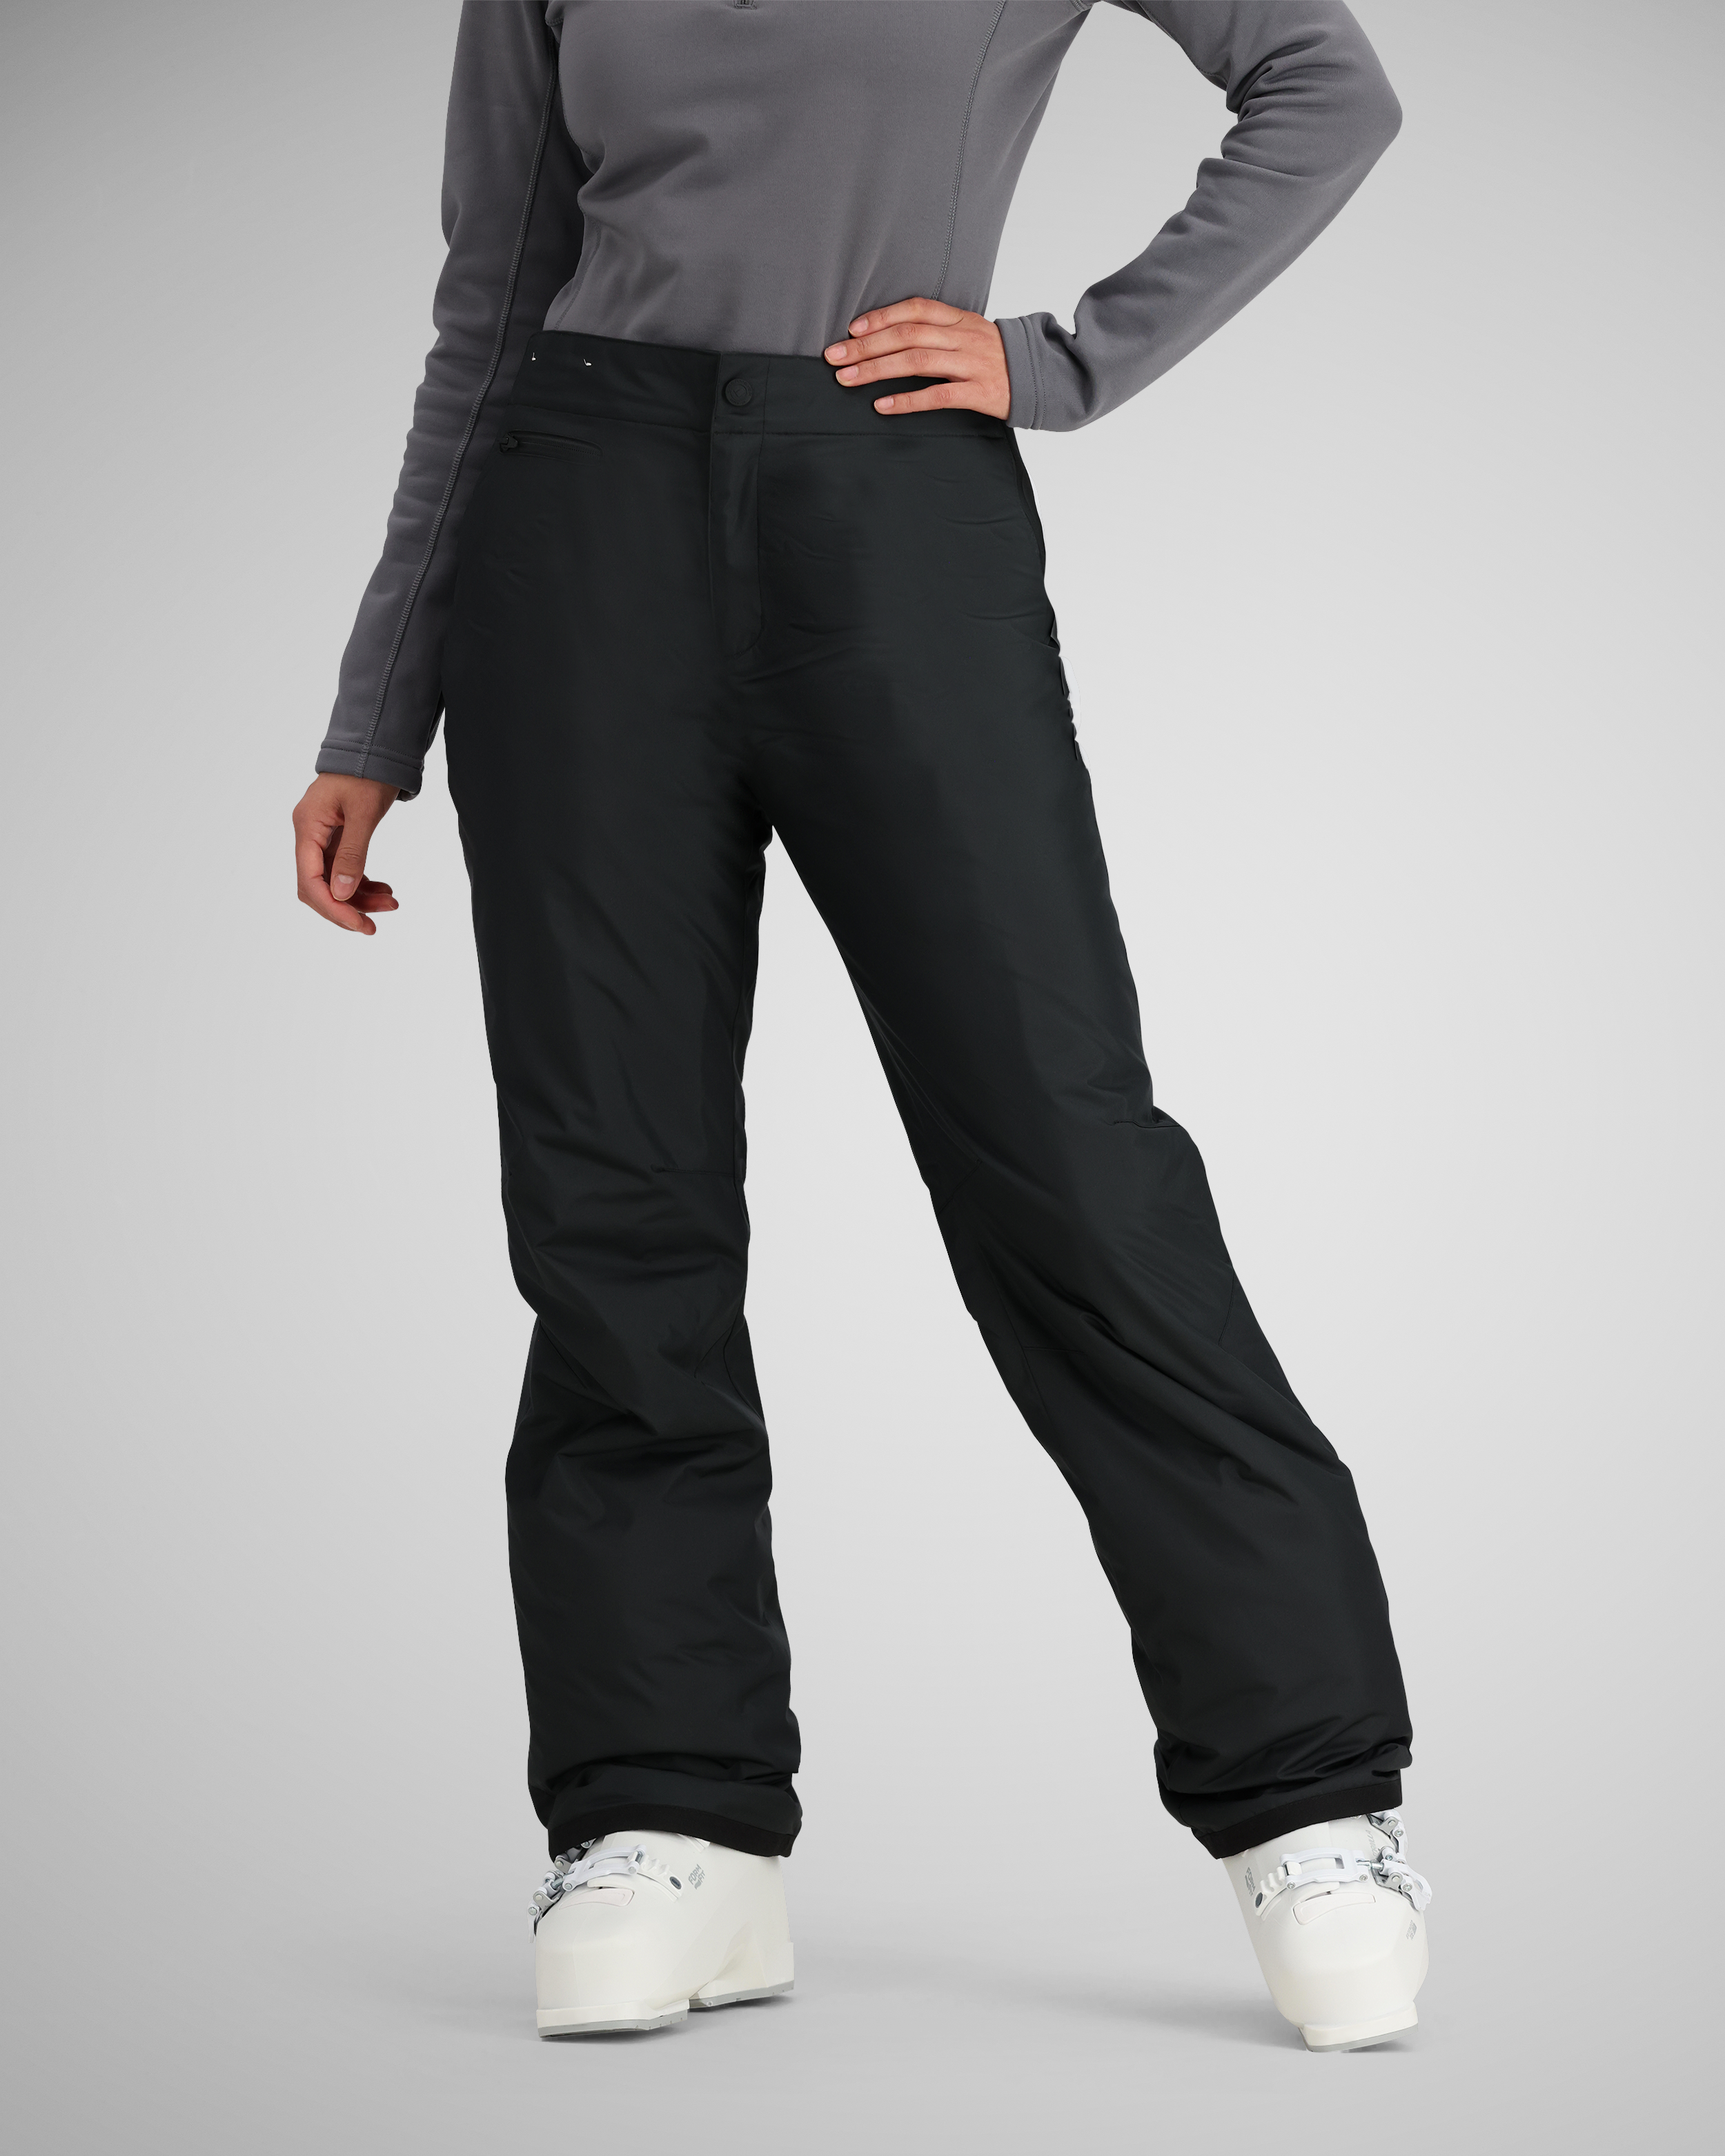 Obermeyer Women's Sugarbush Stretch Pant in Black